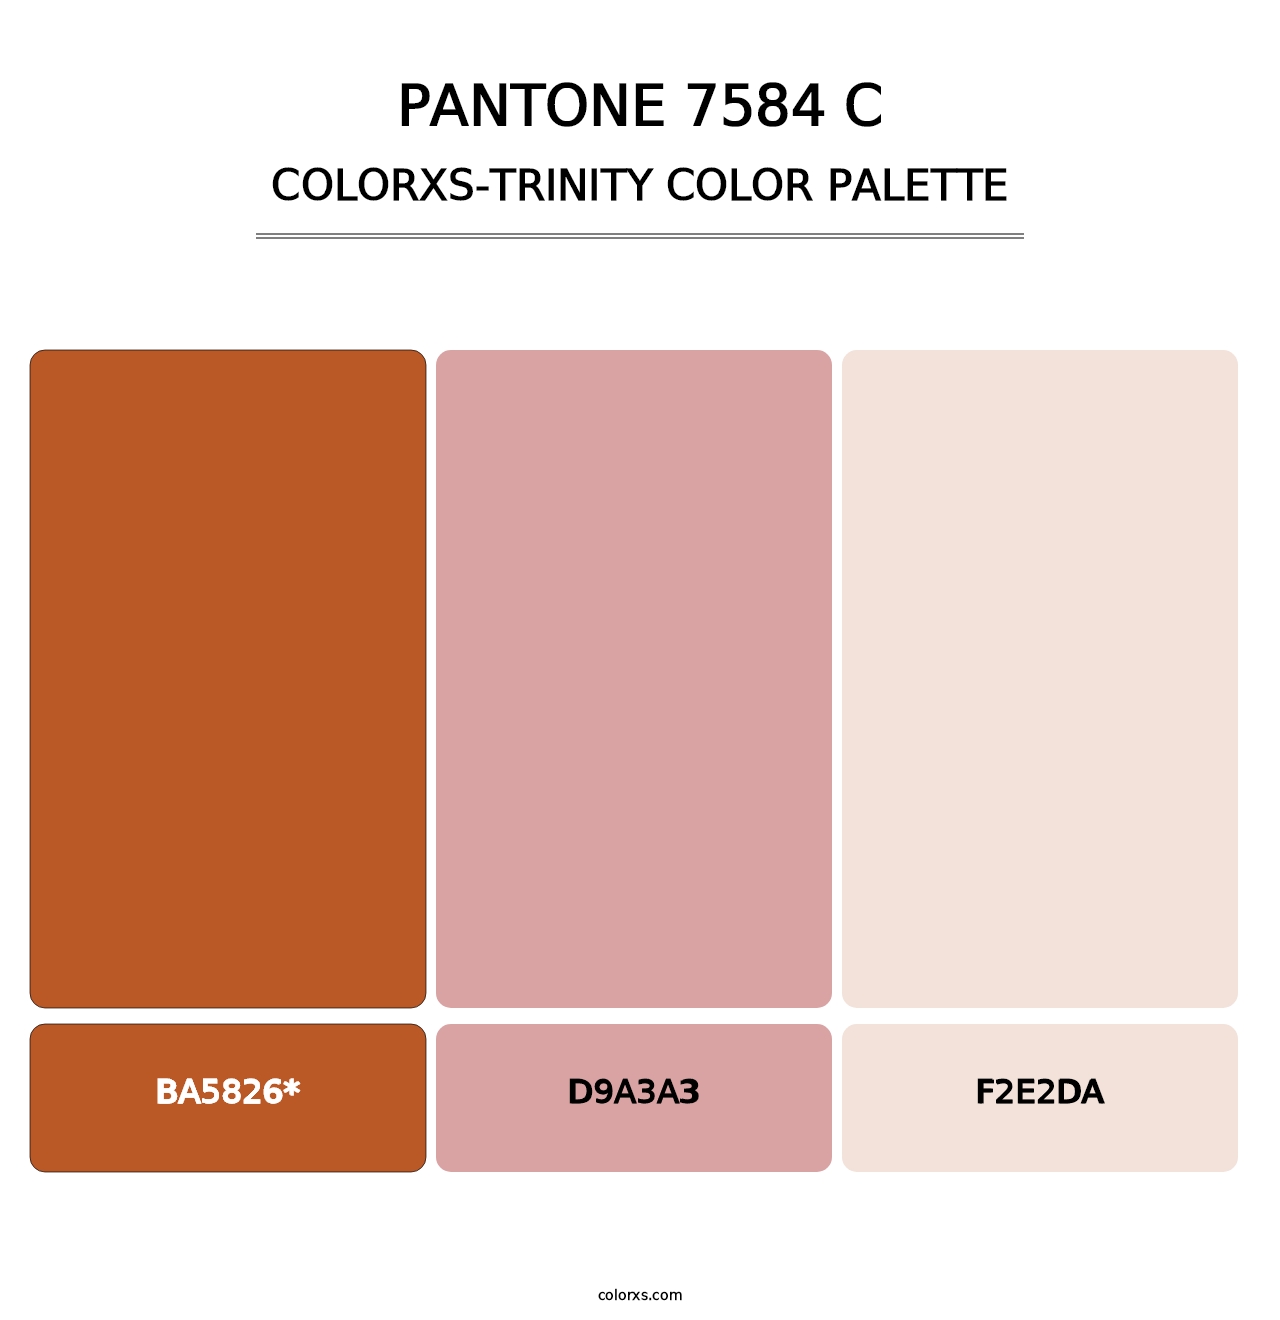 PANTONE 7584 C - Colorxs Trinity Palette